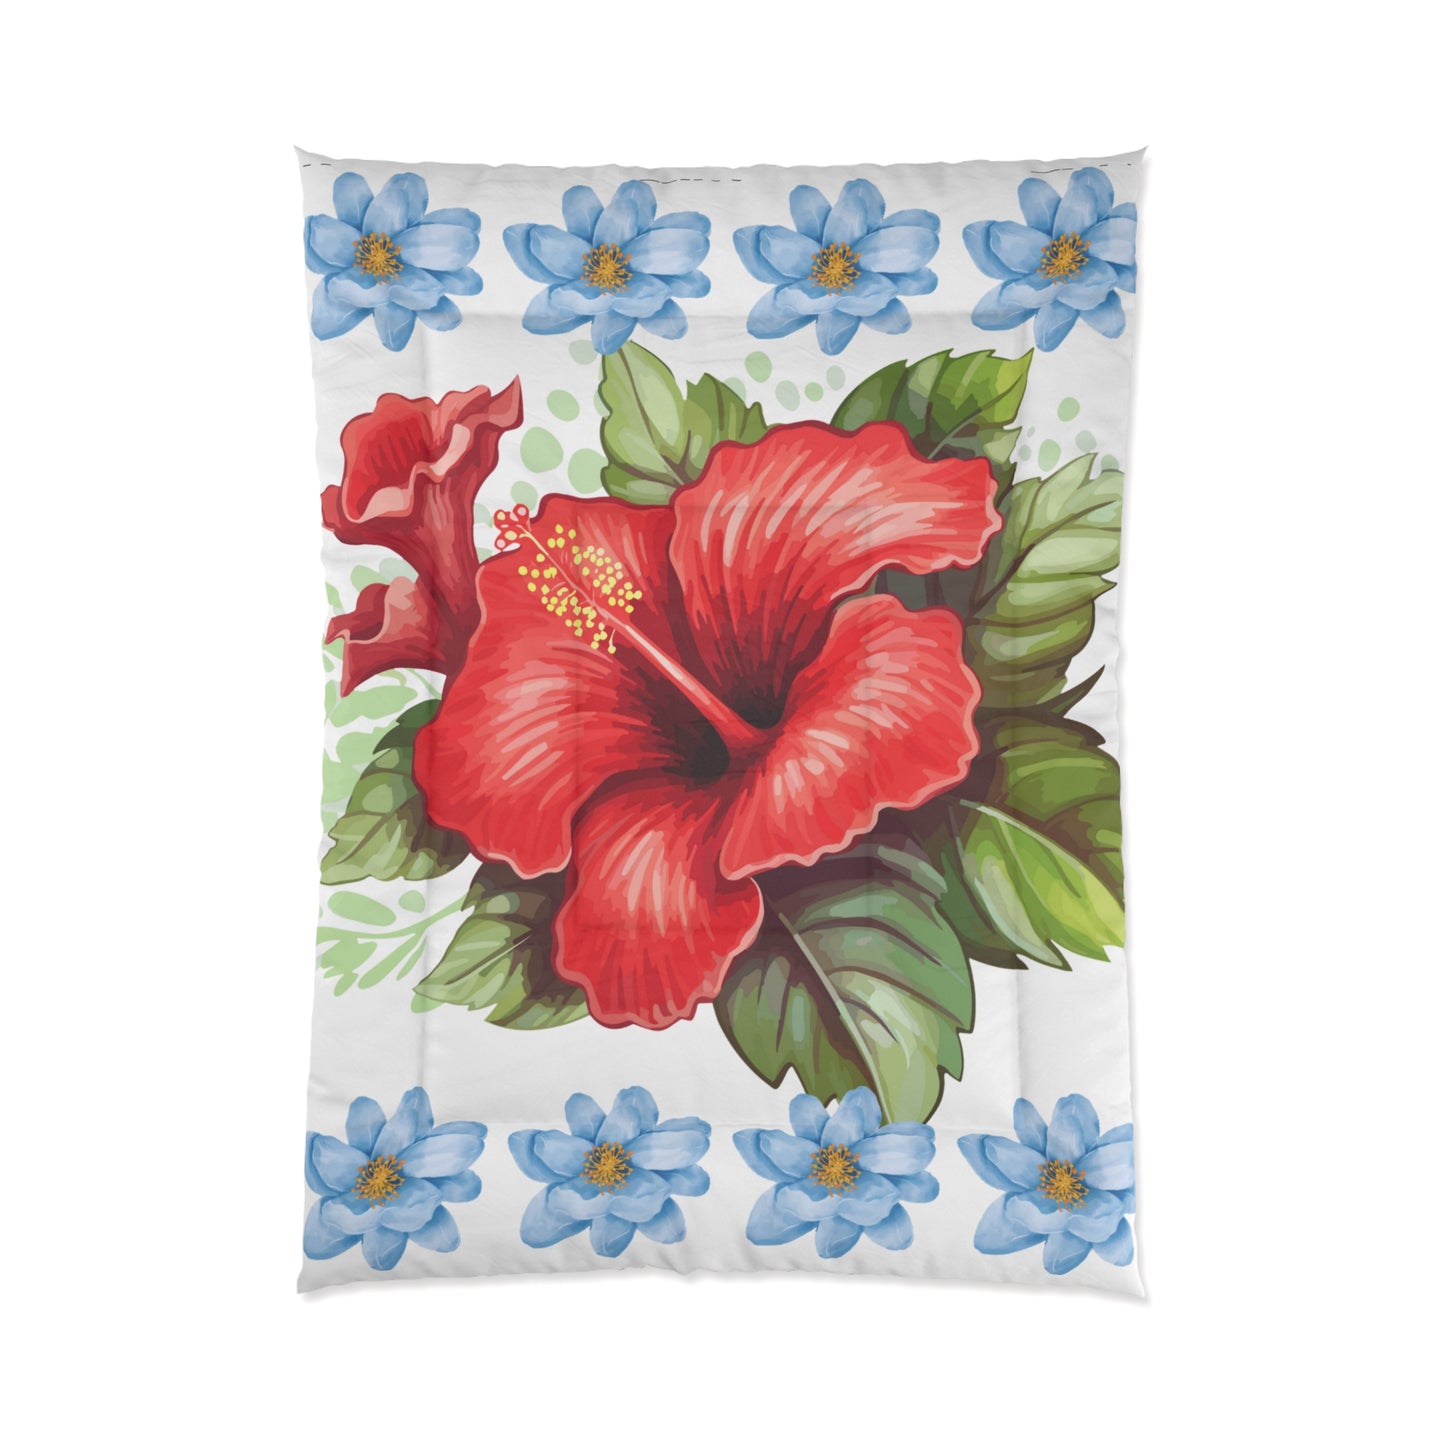 The Ultimate Comfort Doona Blanket - Flower with  flower edges